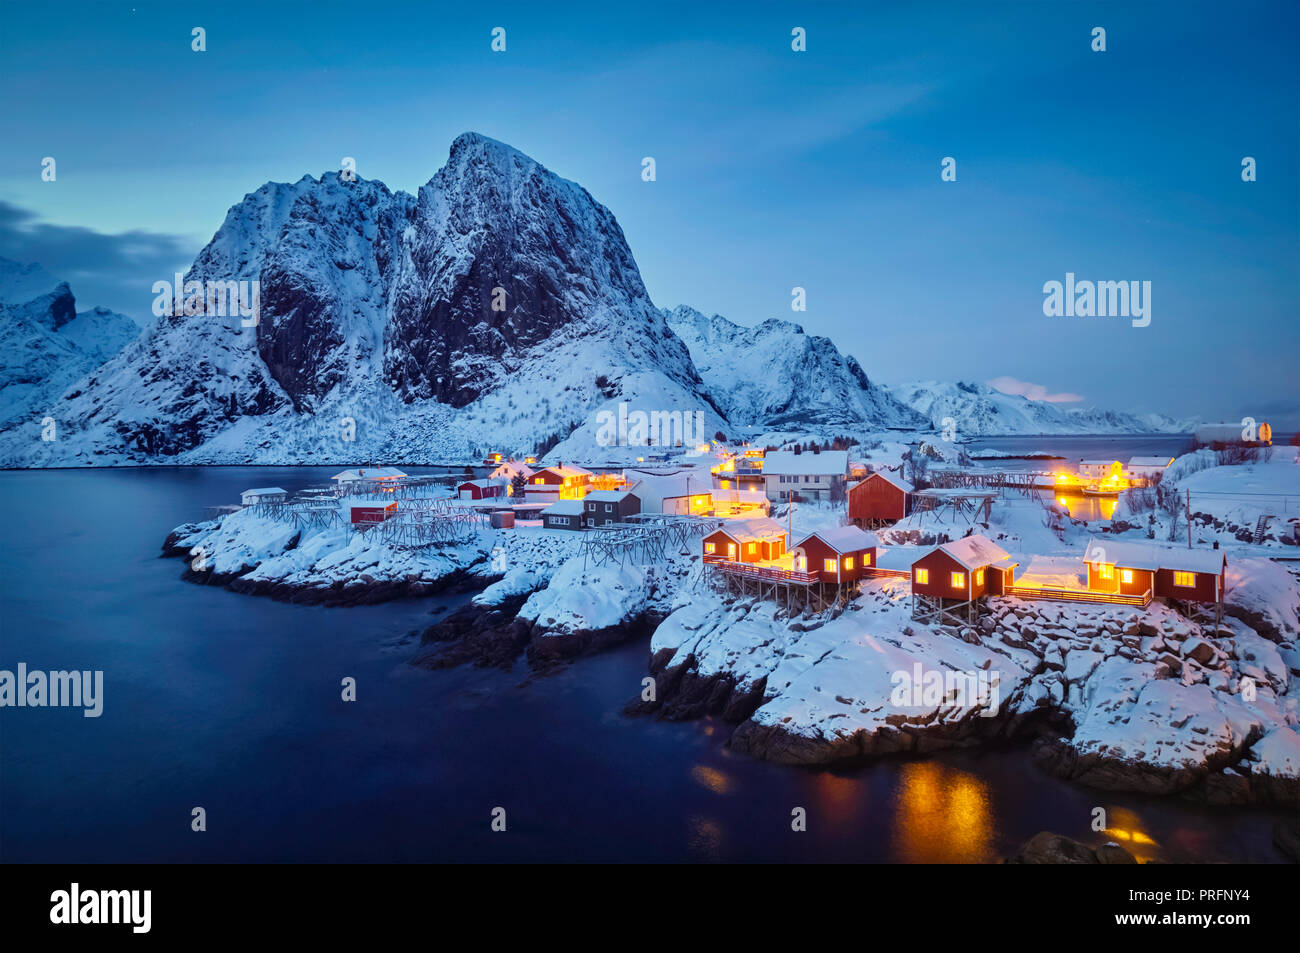 Hamnoy fishing village on Lofoten Islands, Norway  Stock Photo